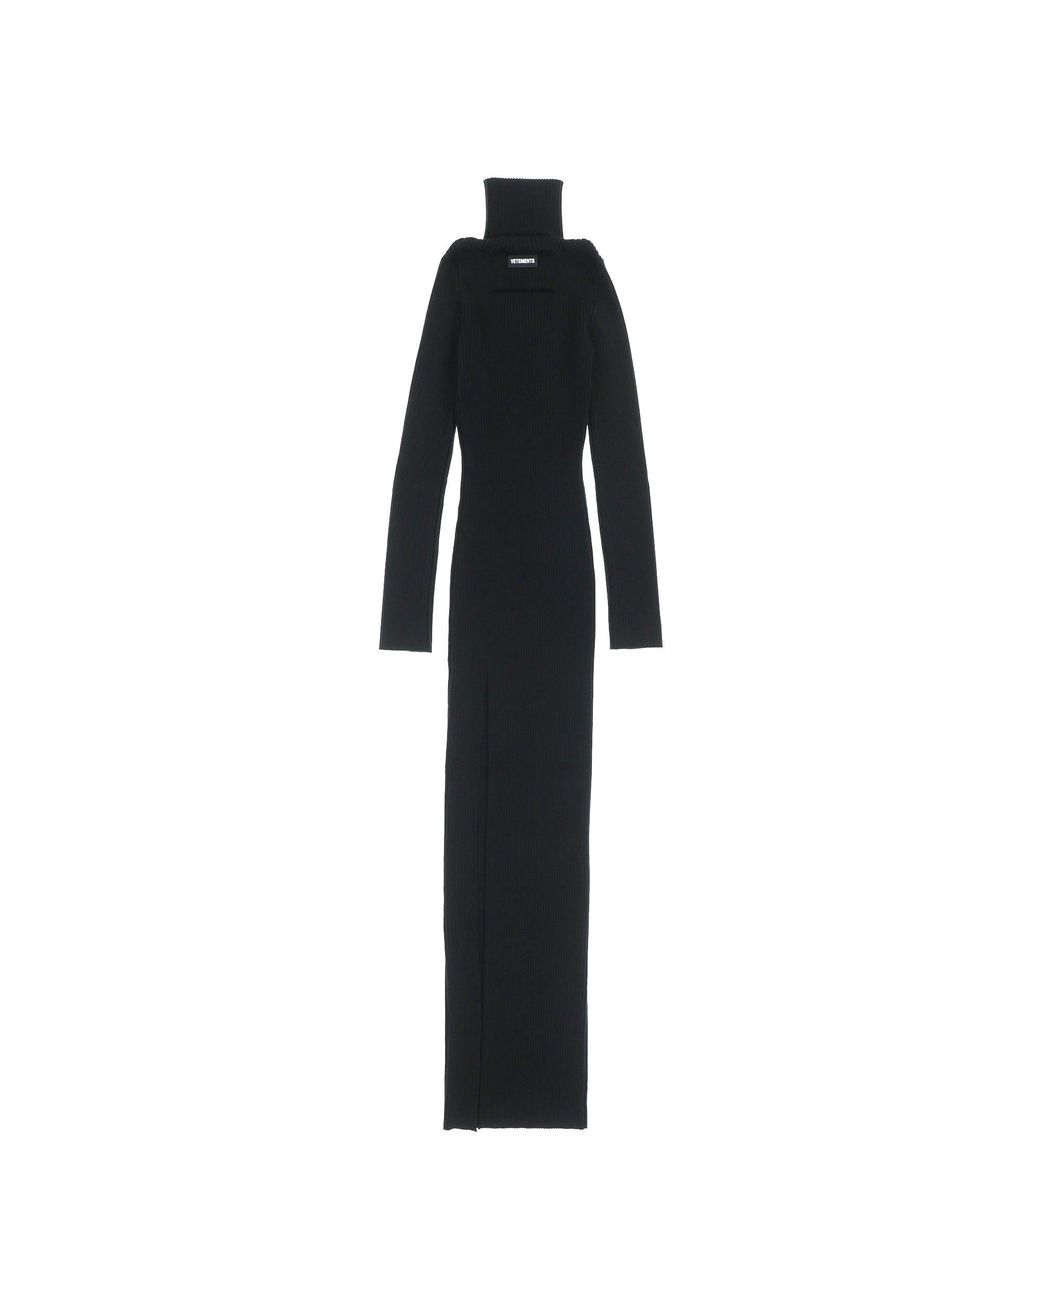 Vetements Knitted Turtleneck Dress in Black | Lyst